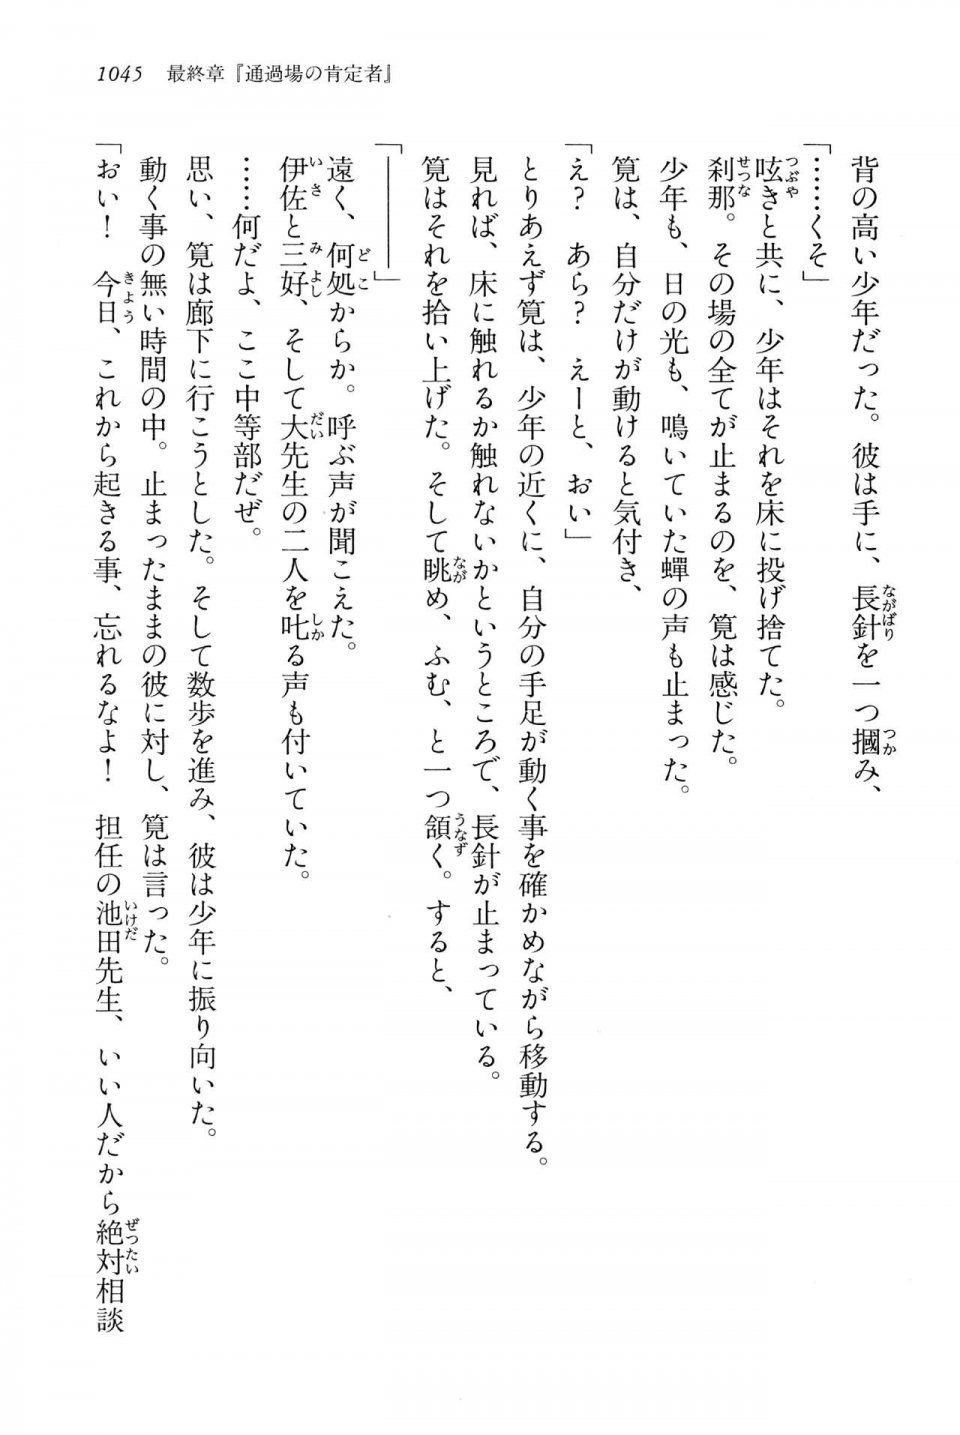 Kyoukai Senjou no Horizon LN Vol 15(6C) Part 2 - Photo #515